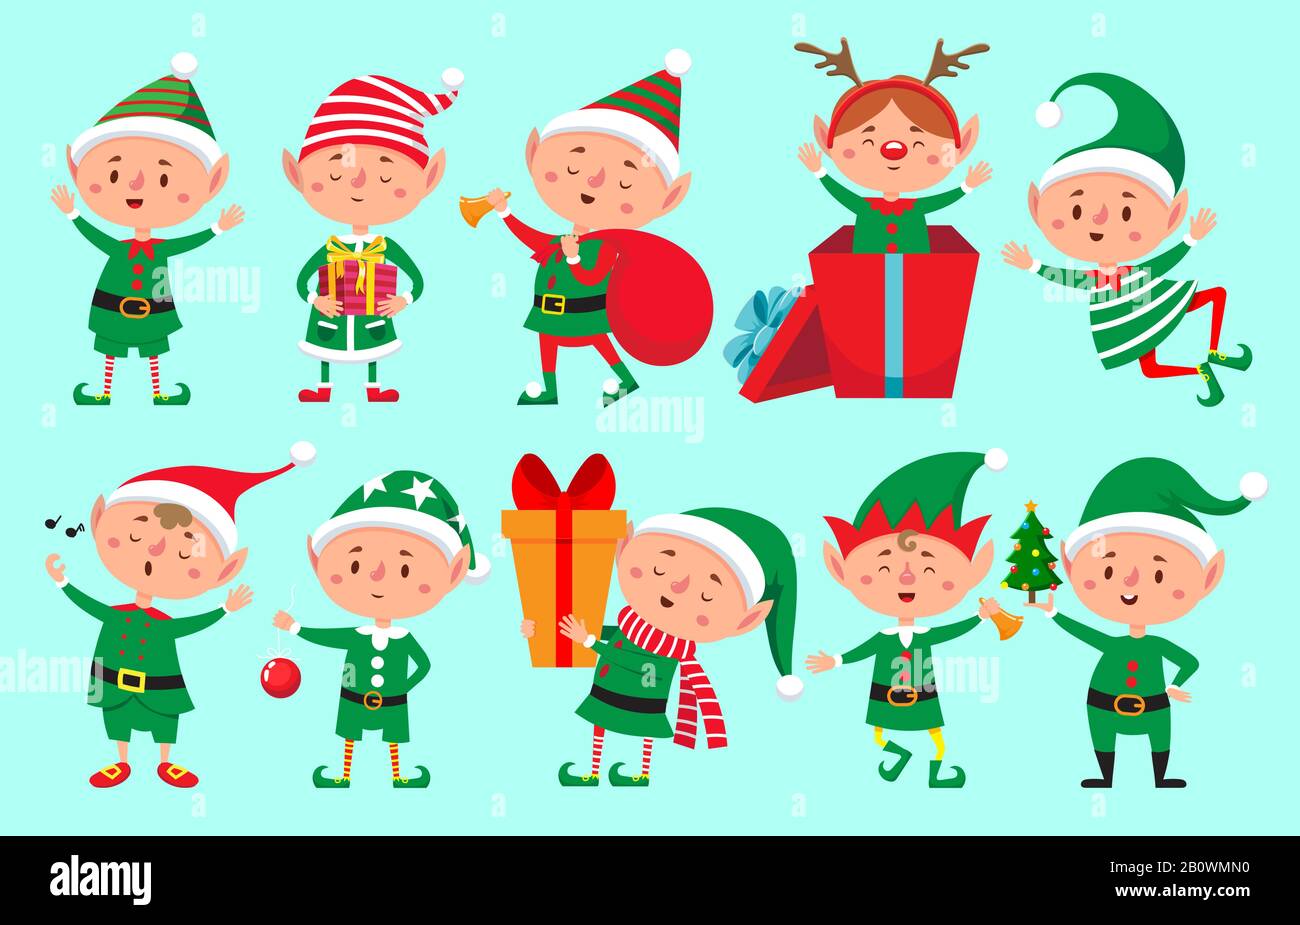 Christmas elf character. Santa Claus helpers cartoon, cute dwarf elves fun characters vector isolated Stock Vector